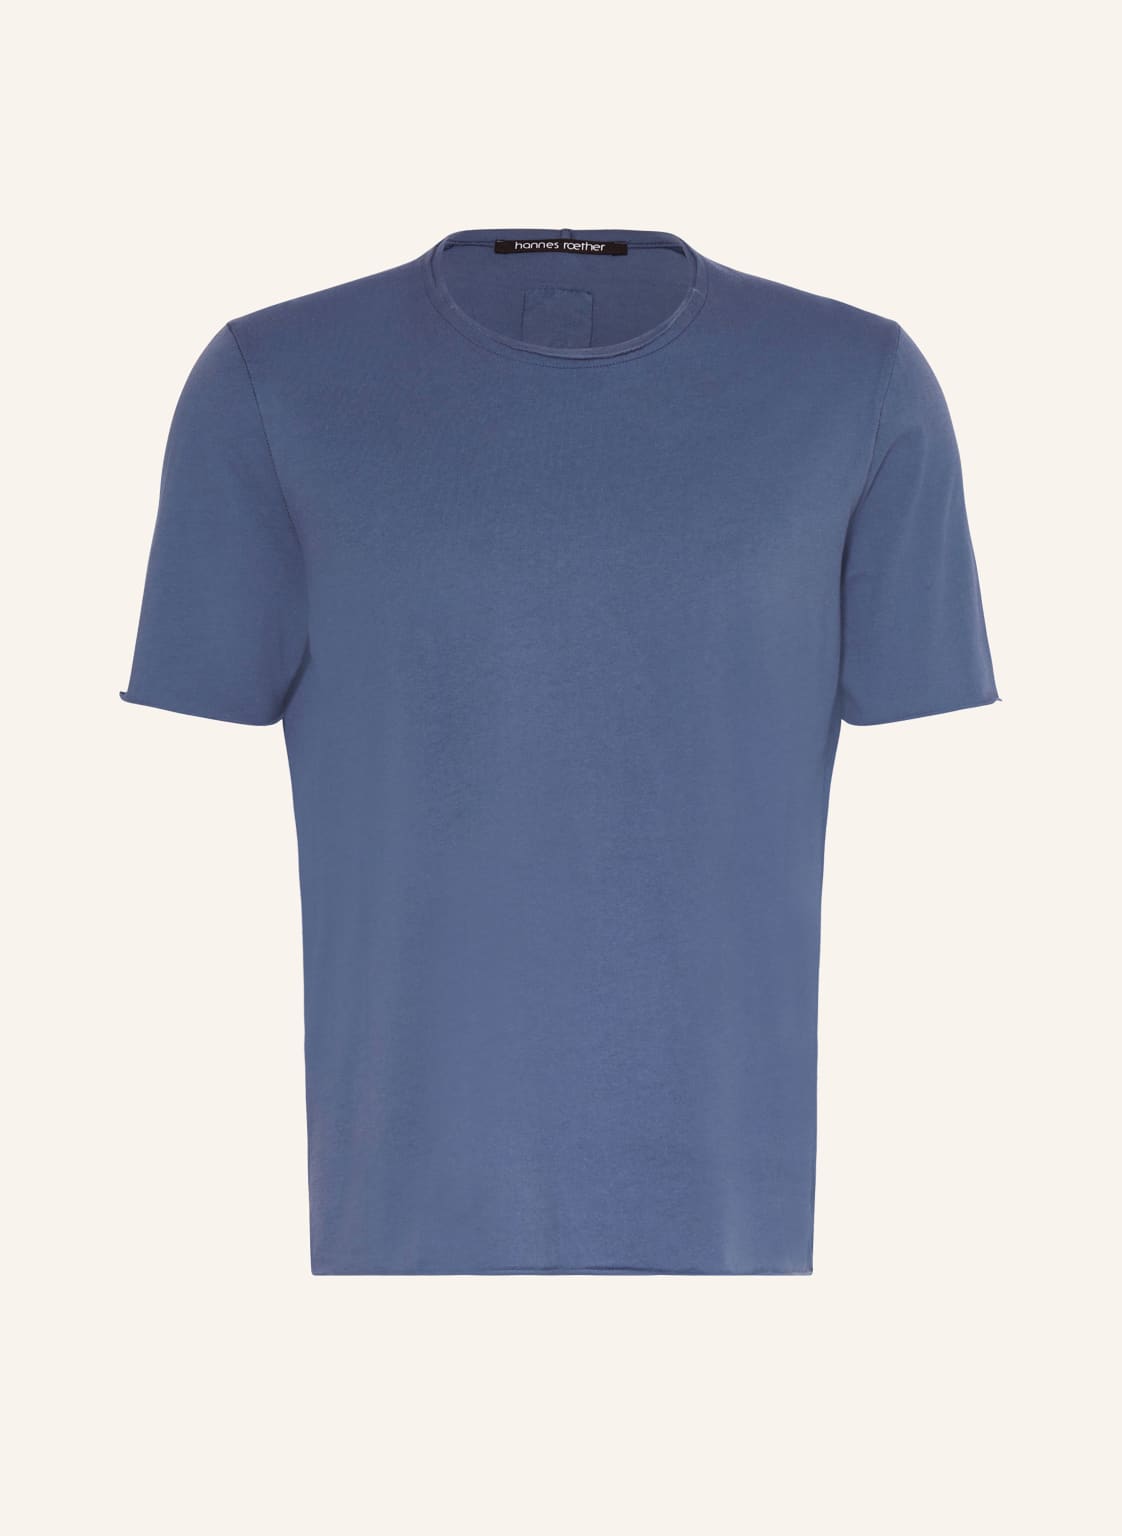 Hannes Roether T-Shirt d35day blau von hannes roether